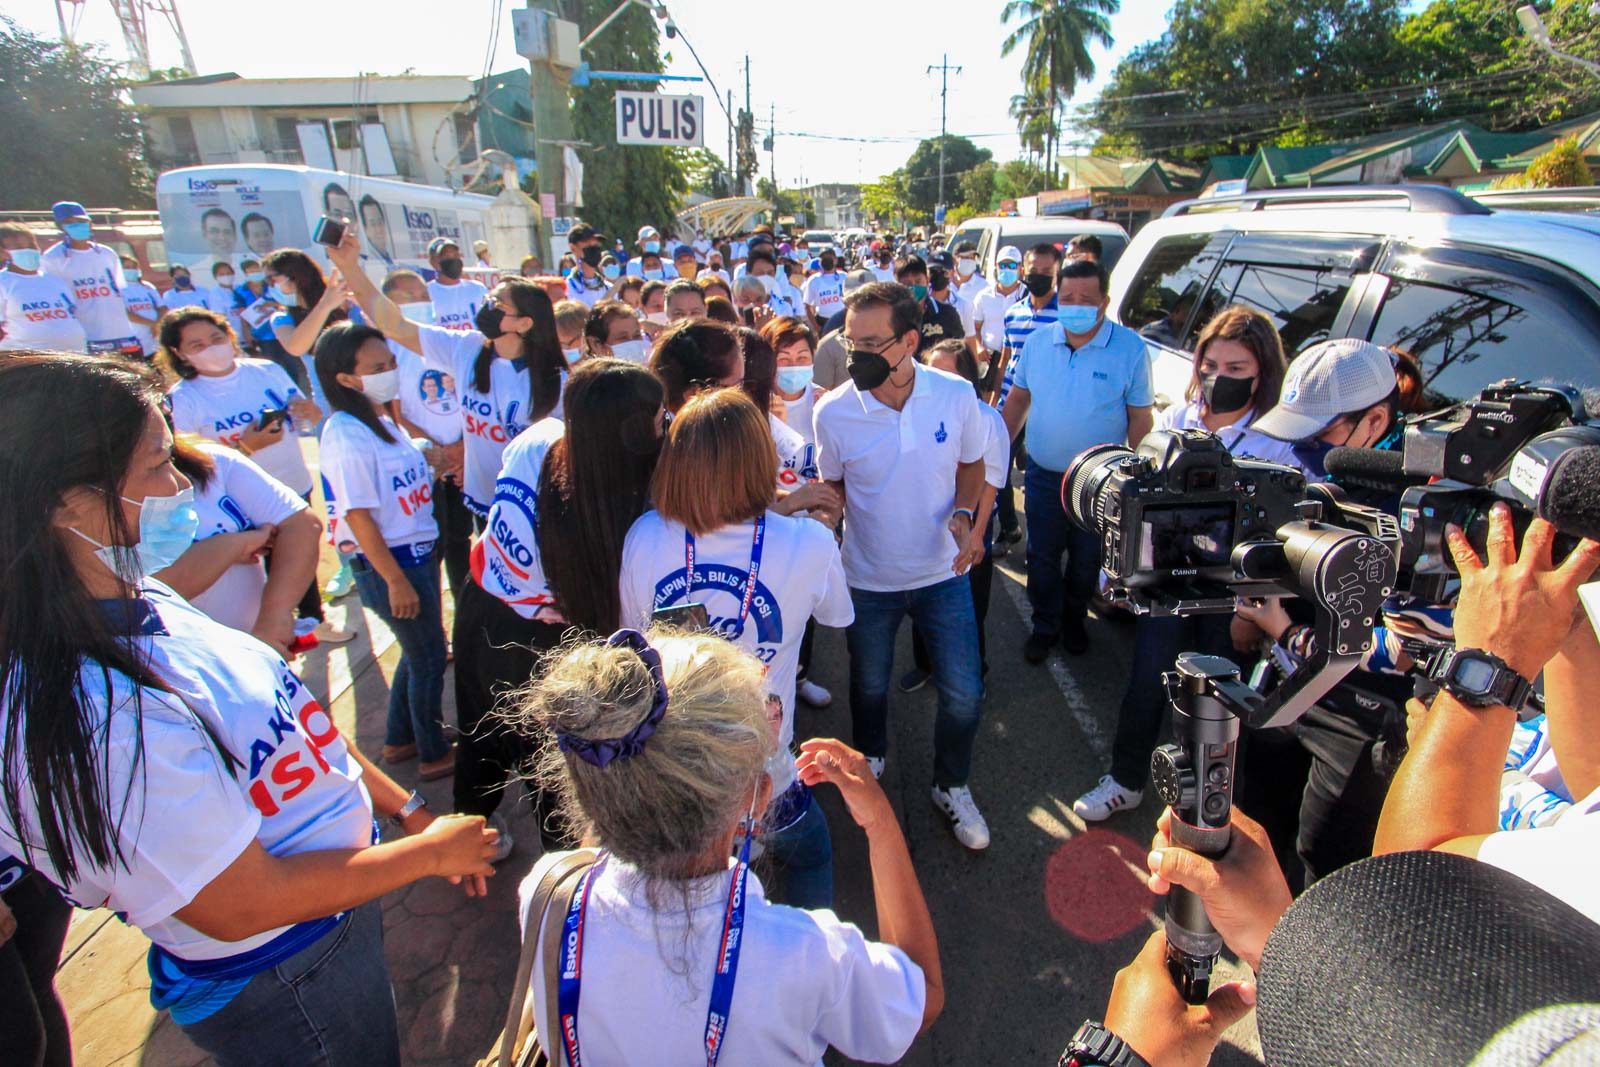 Isko Moreno: Philippines needs a Zelenskiy, not someone always ‘absent’